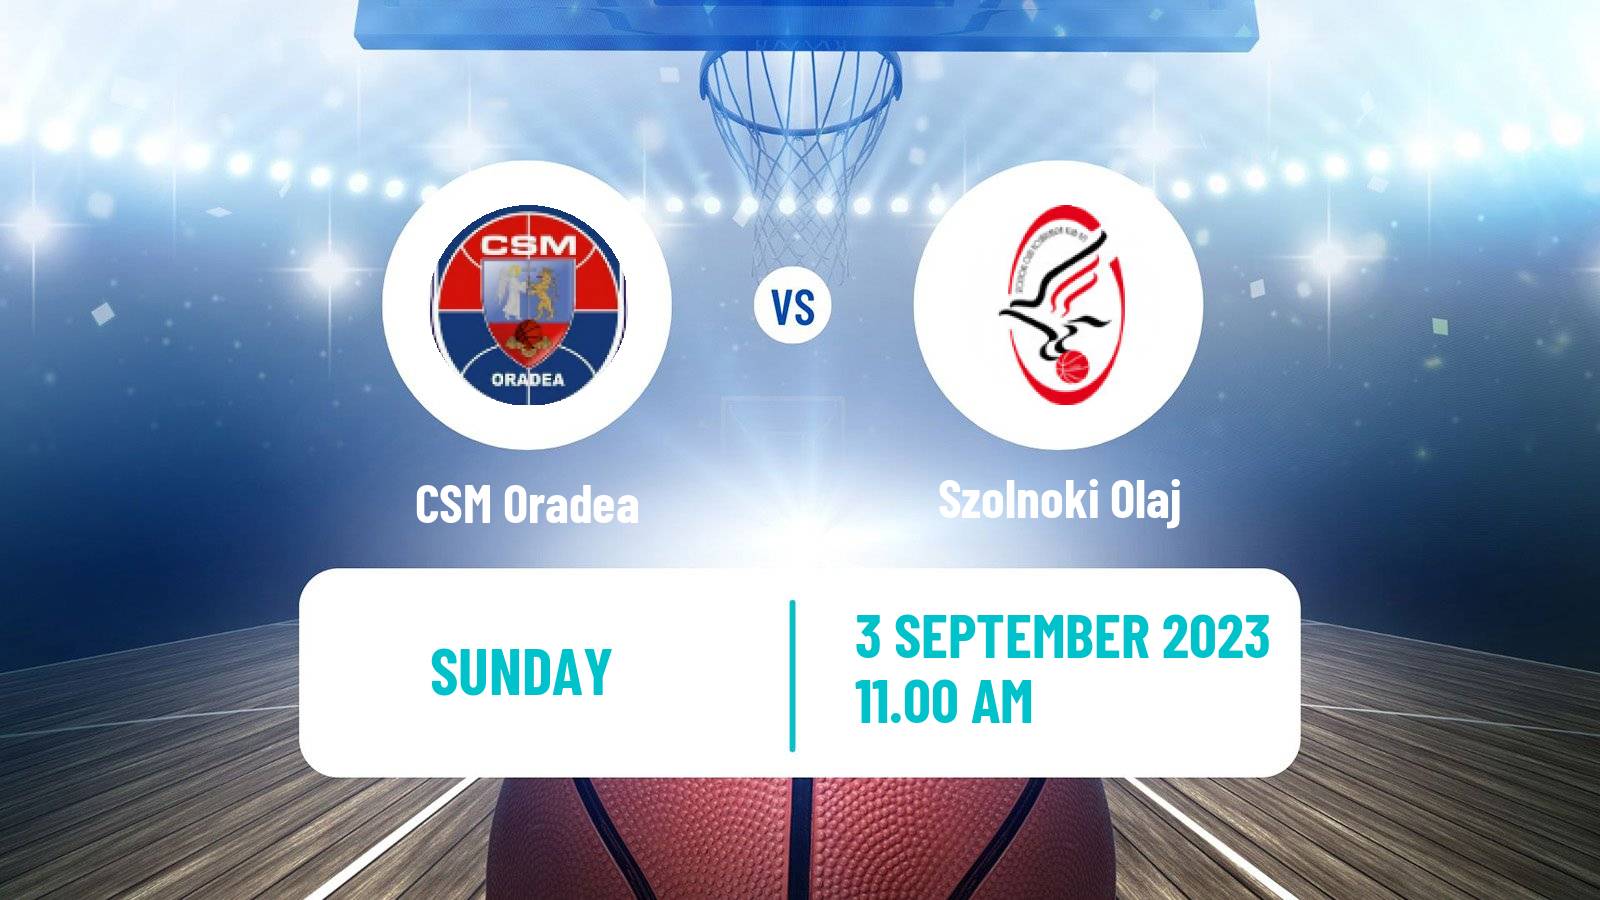 Basketball Club Friendly Basketball CSM Oradea - Szolnoki Olaj